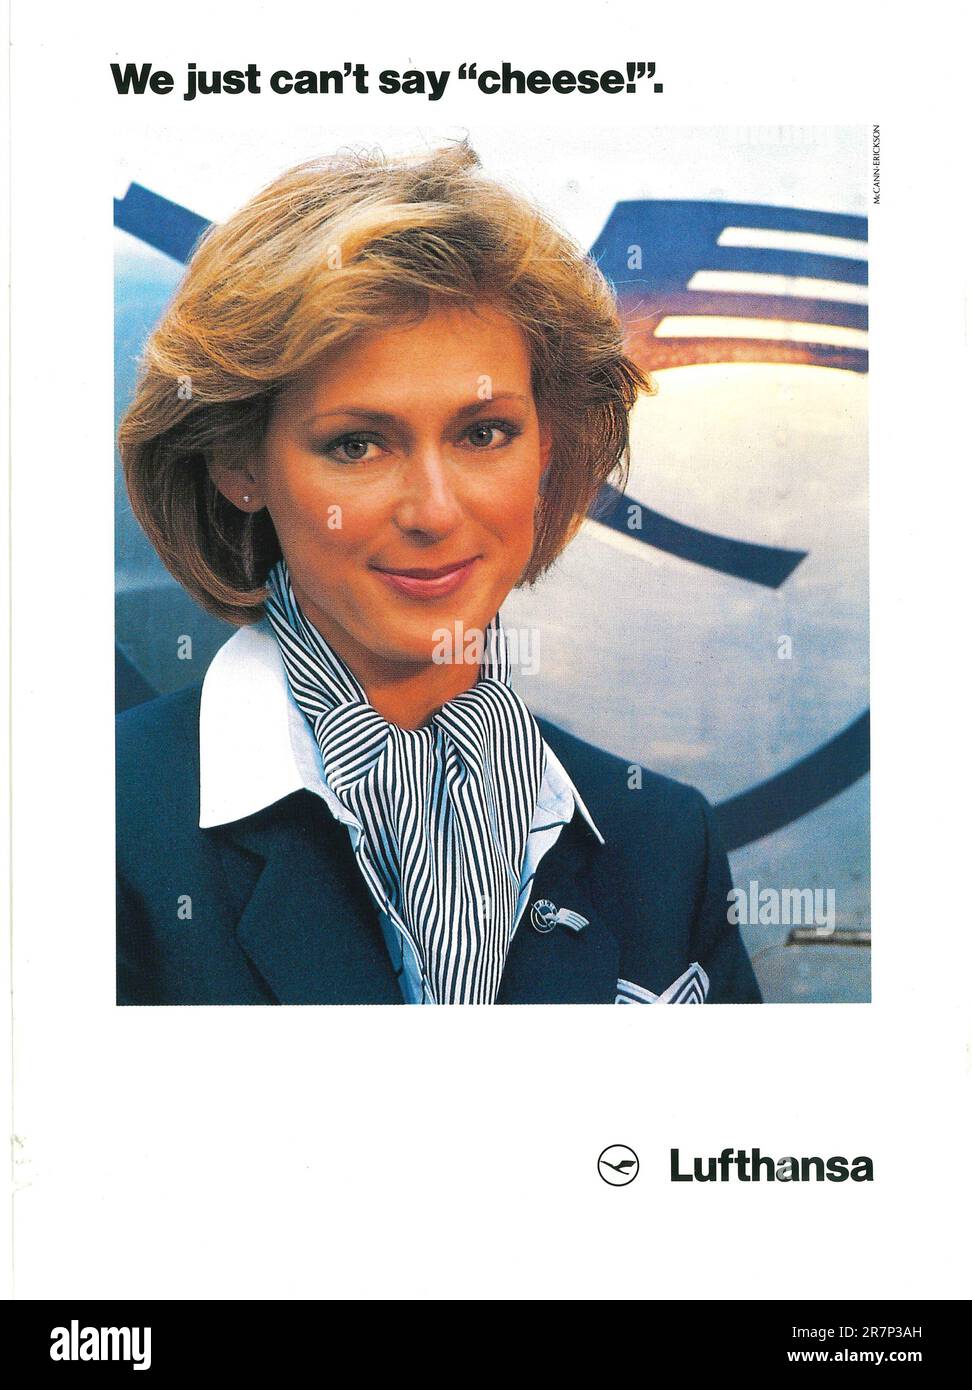 Lufthansa advert in a magazine 1988 Stock Photo